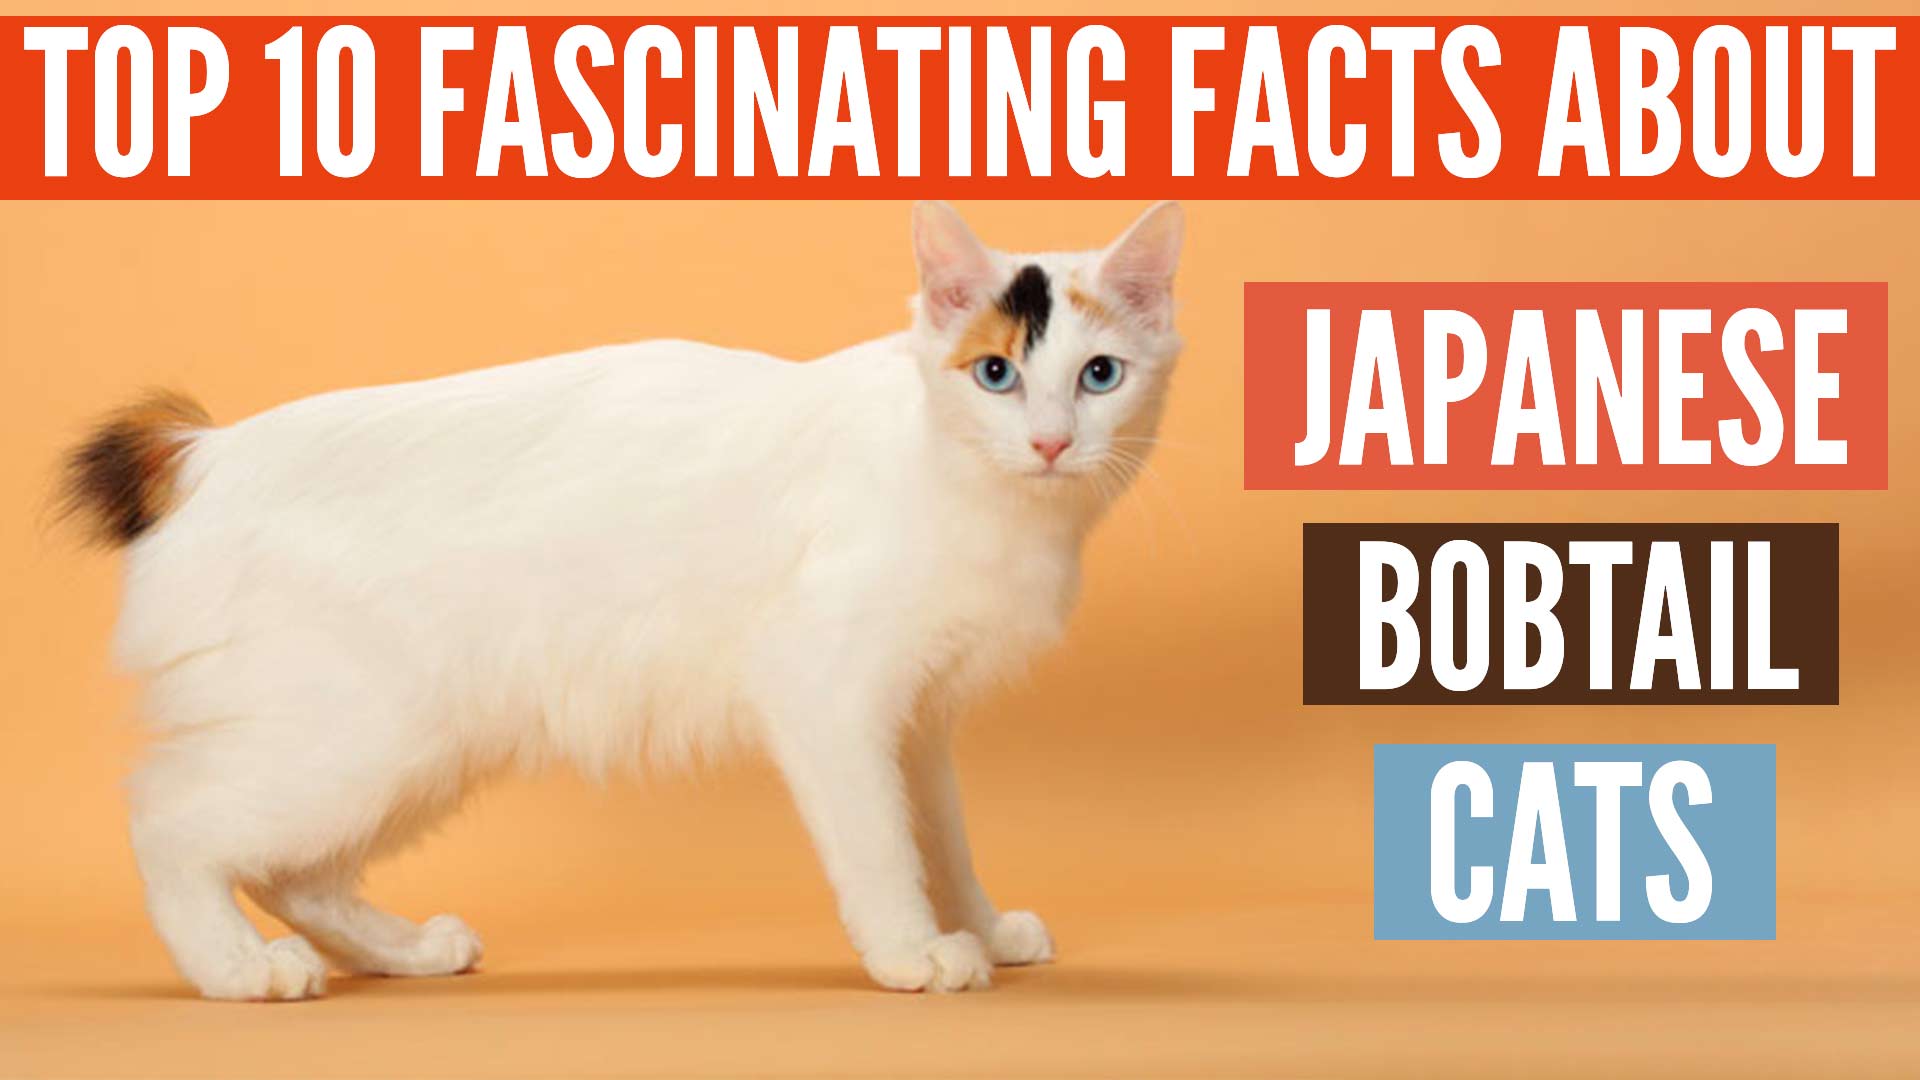 Japanese Bobtail Cats